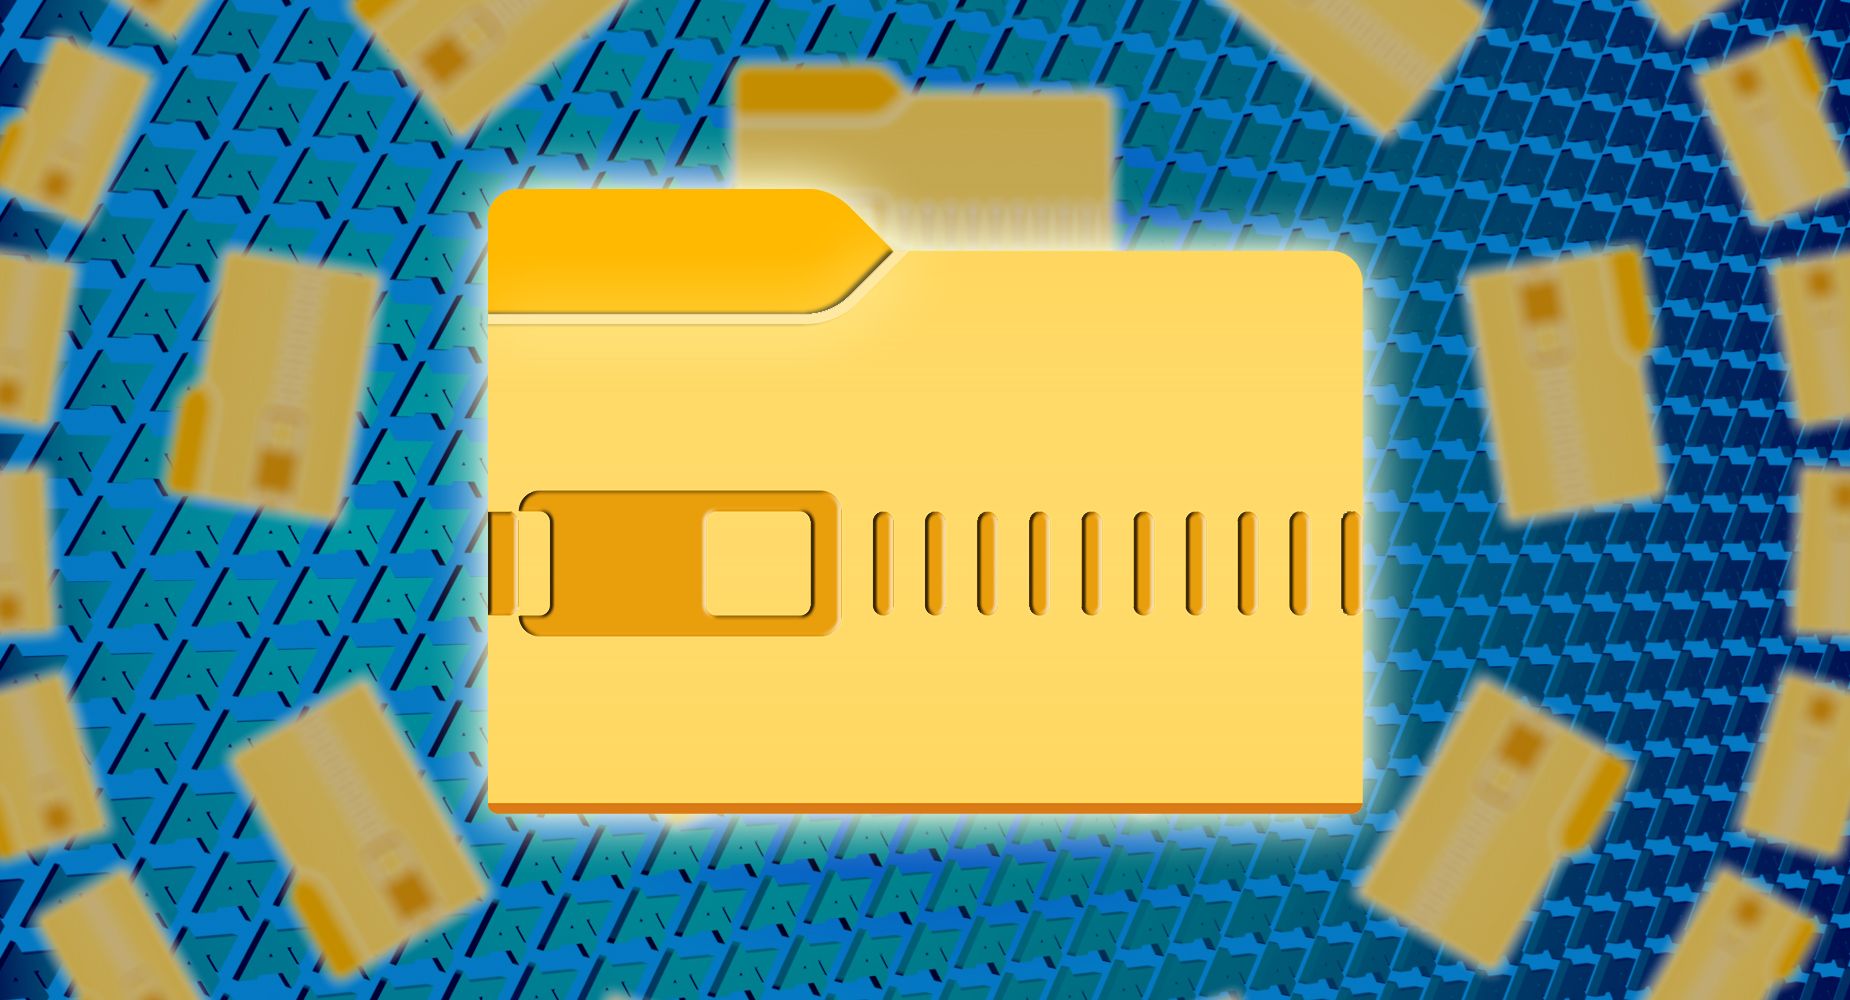 Folder with a zipper on it over an array of AP logos